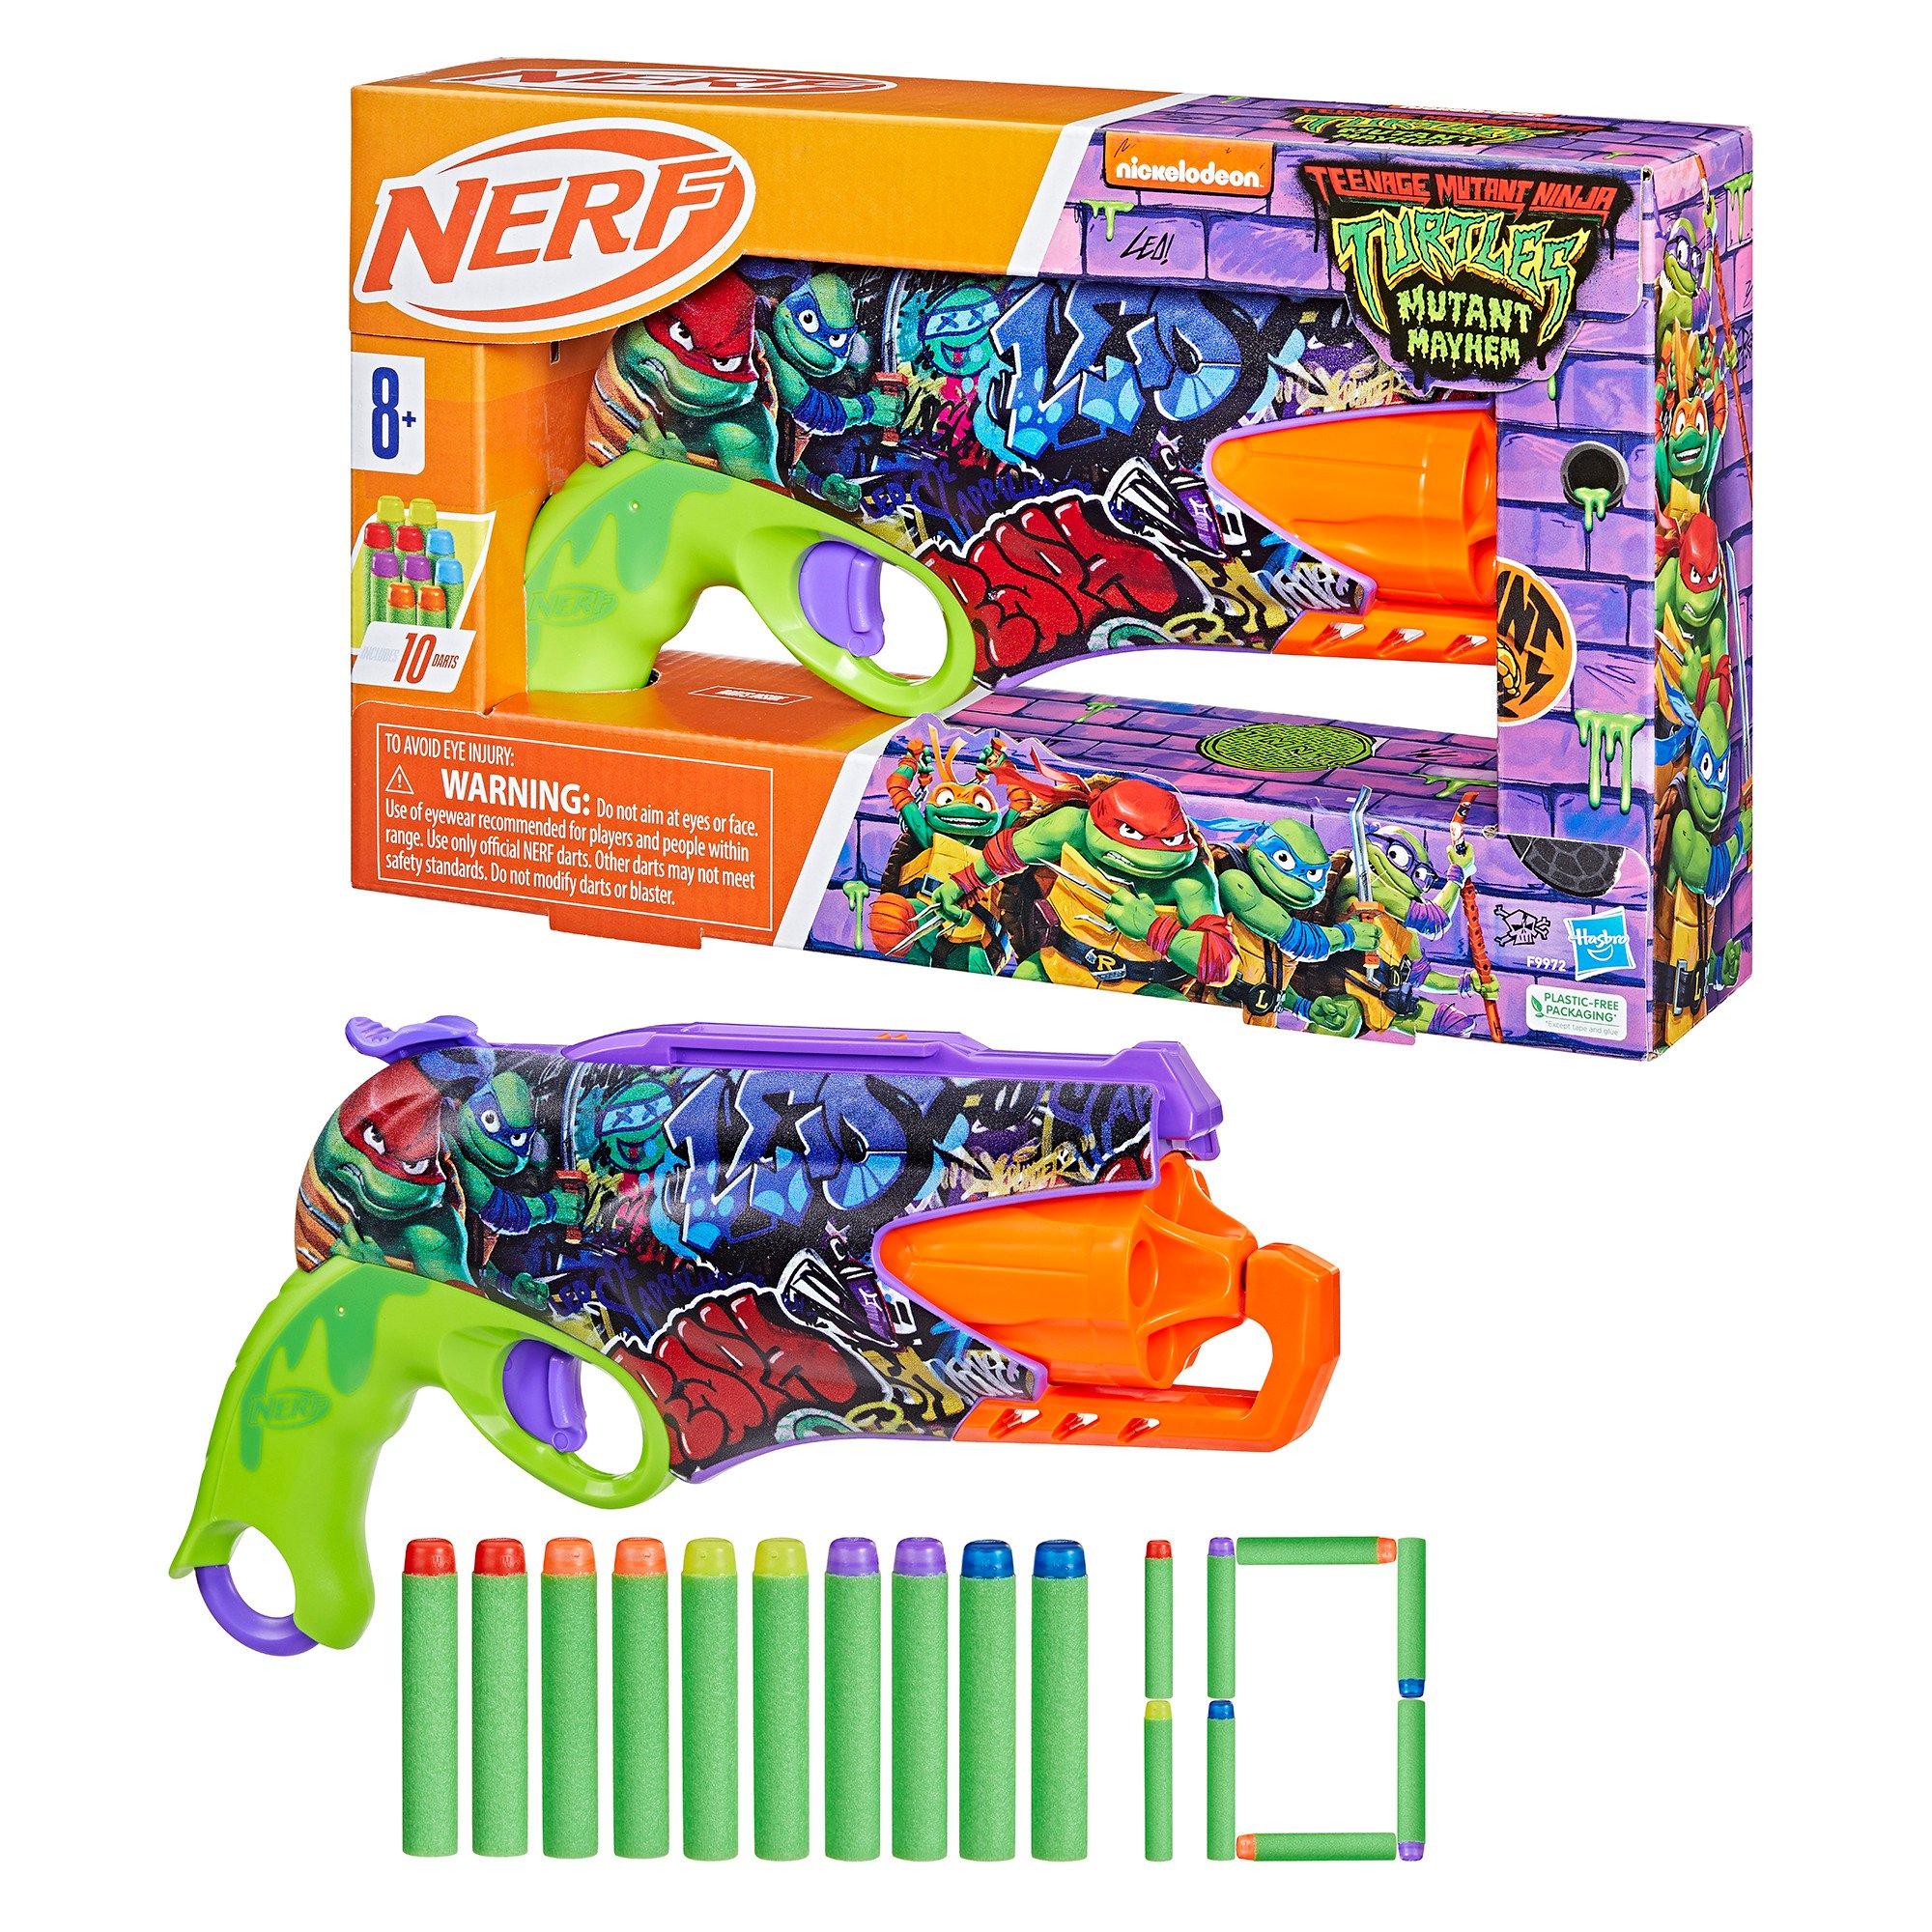 https://media.gamestop.com/i/gamestop/20006127_ALT03/NERF-Teenage-Mutant-Ninja-Turtles-Blaster?$pdp$